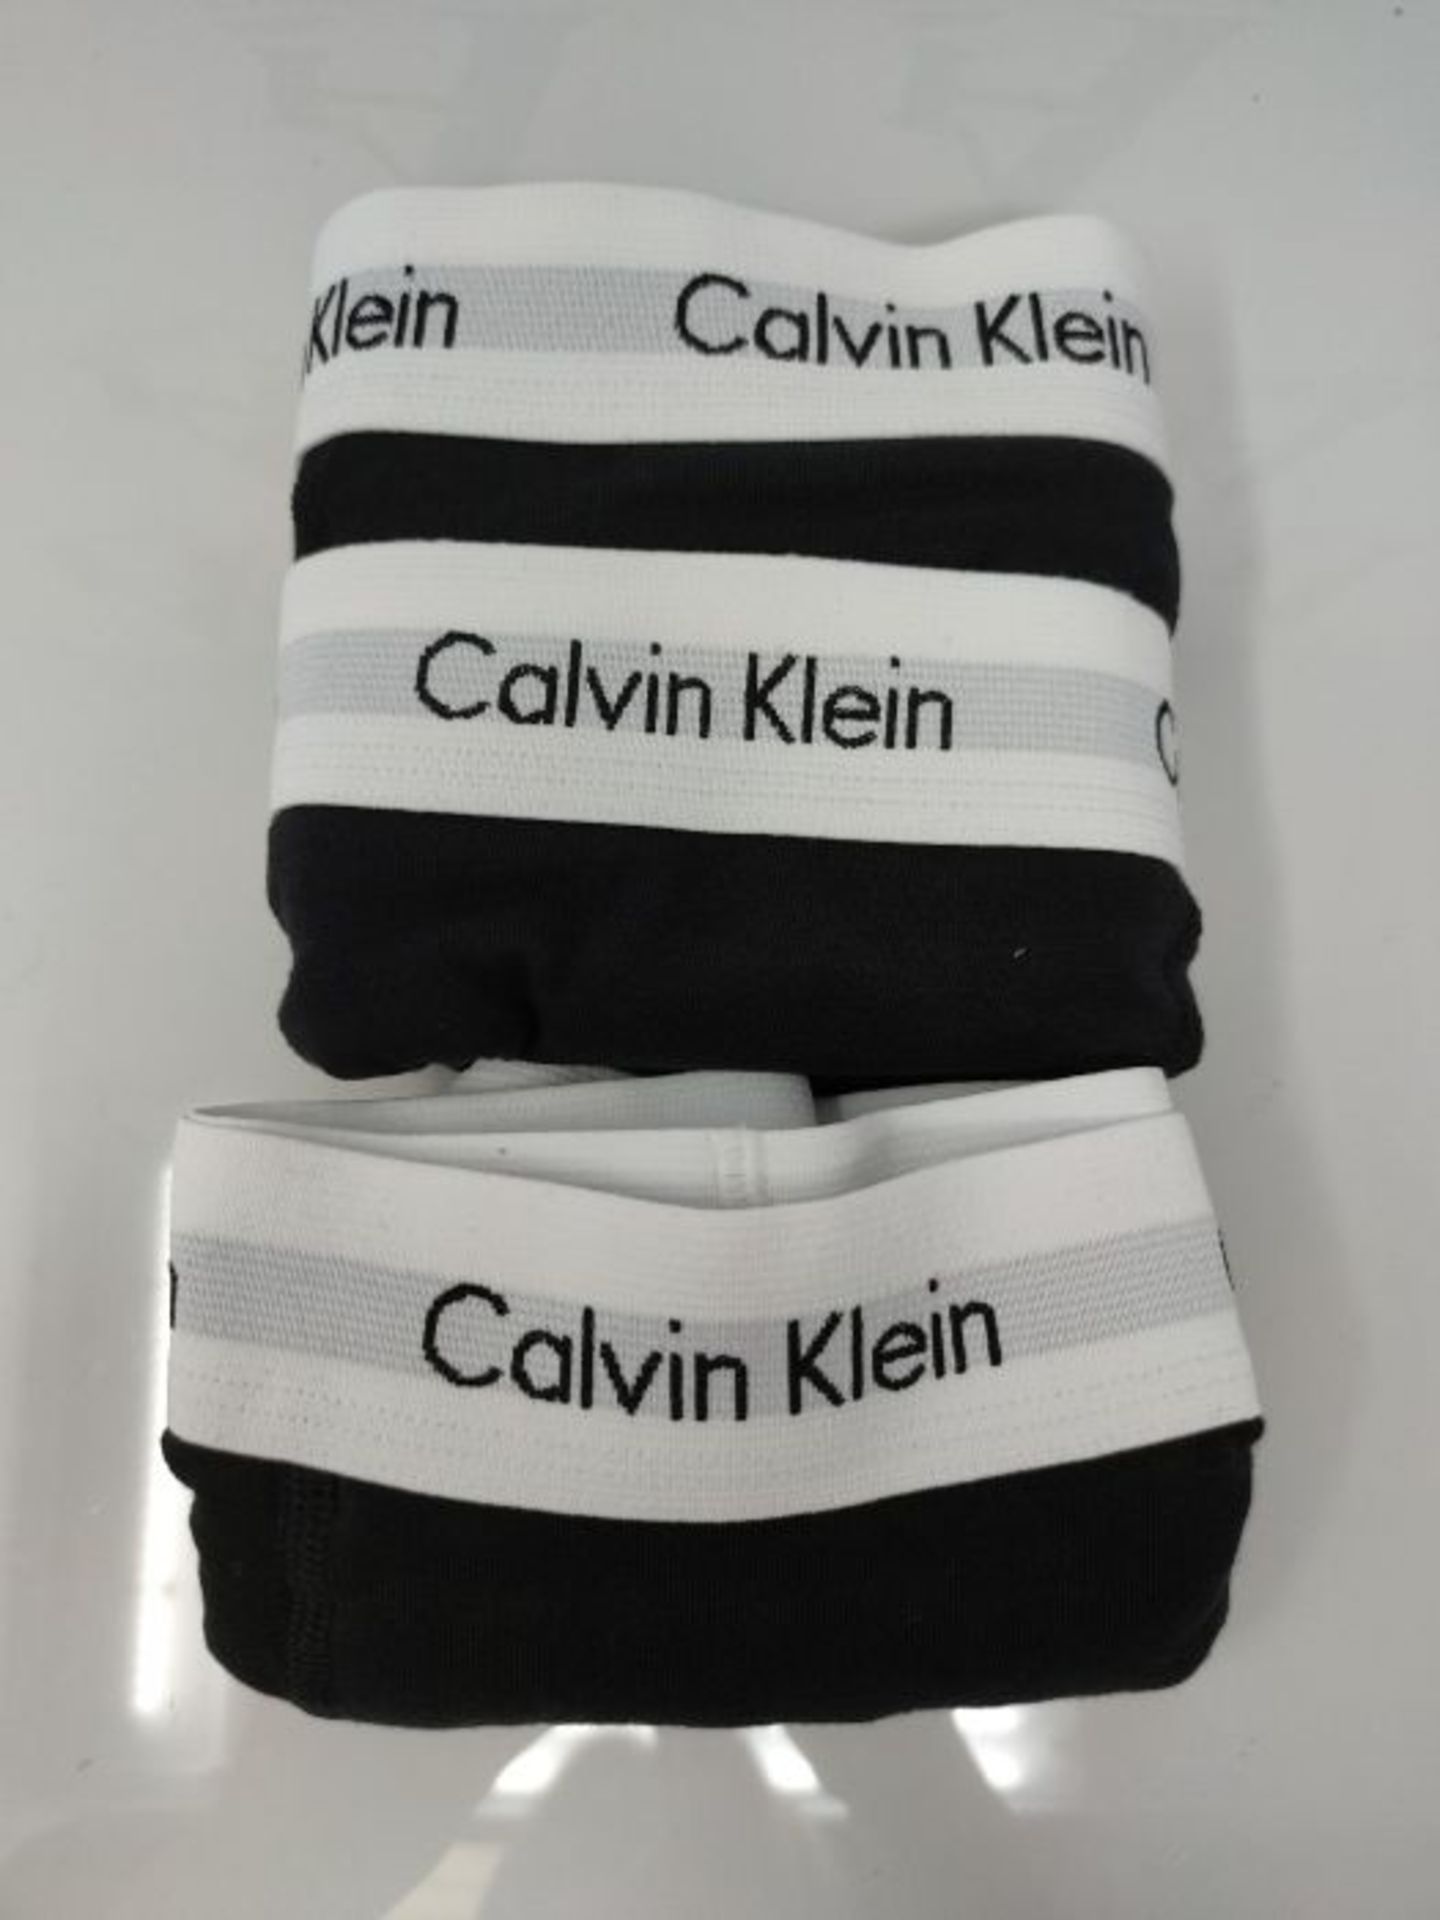 Calvin Klein Men's 3 Pack Trunks-Cotton Stretch Boxers, Black, M - Image 3 of 3